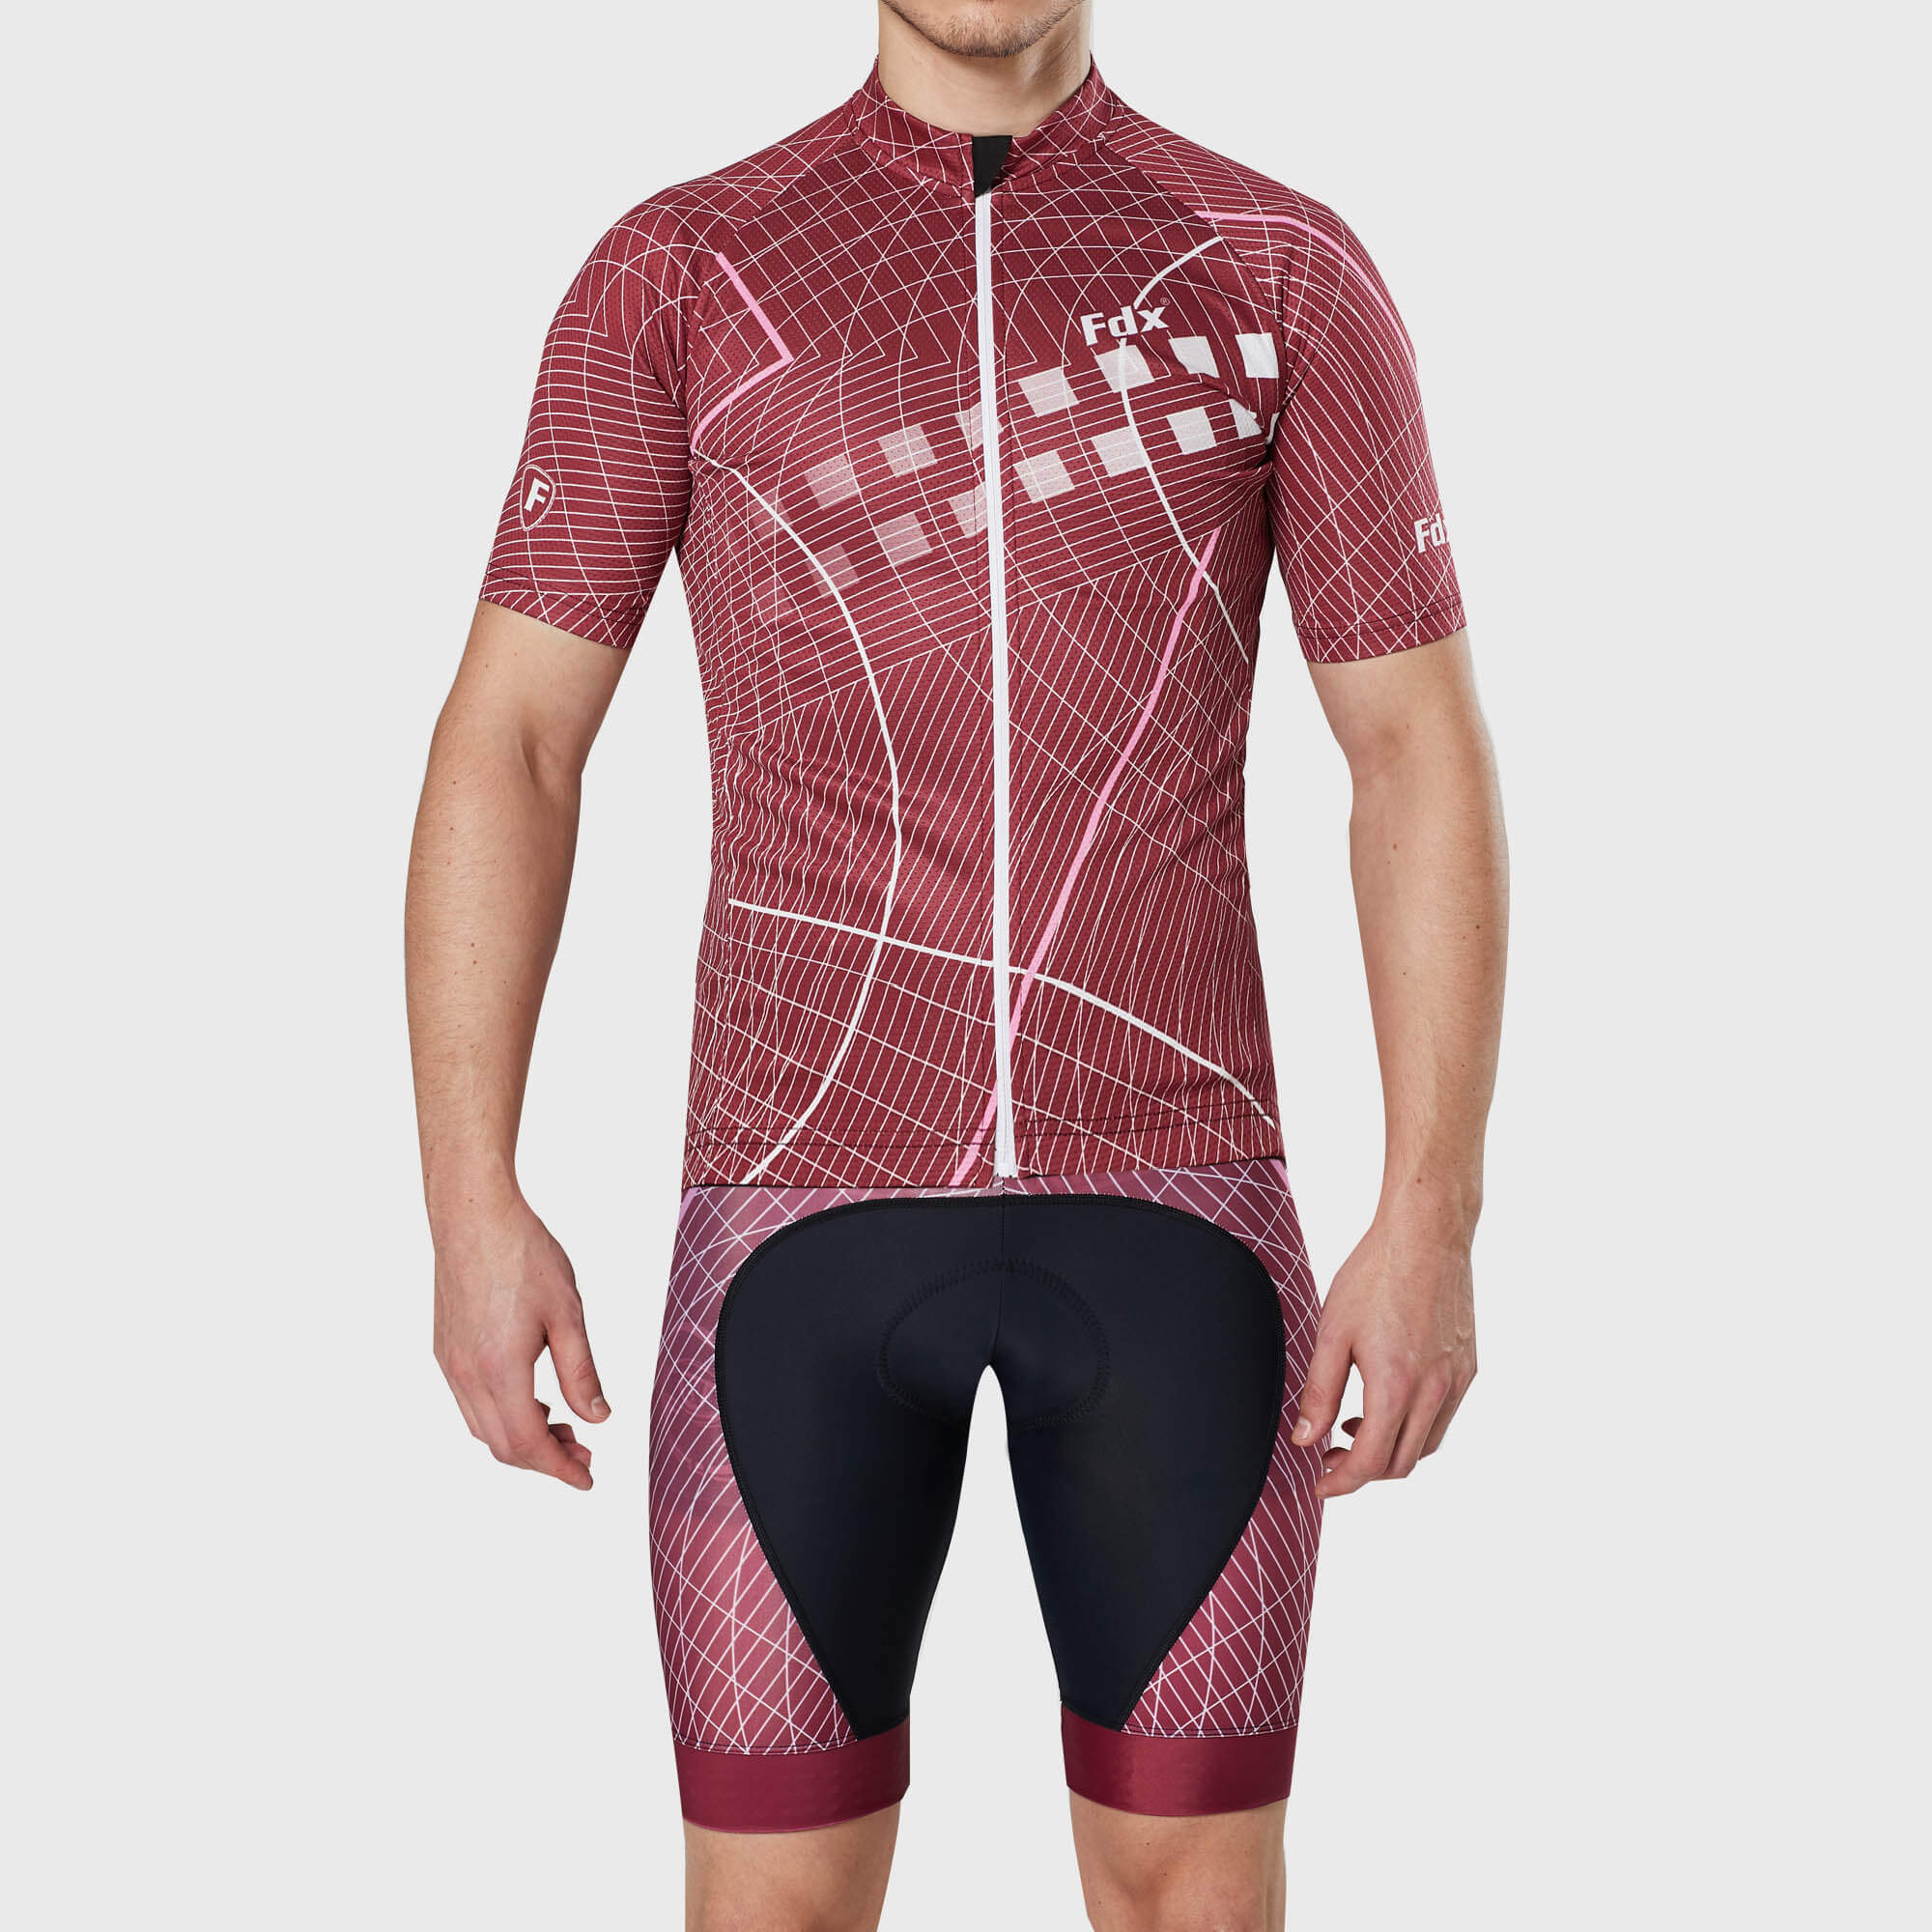 Fdx Mens Red Short Sleeve Cycling Jersey & Gel Padded Bib Shorts Best Summer Road Bike Wear Light Weight, Hi-viz Reflectors & Pockets - Classic II